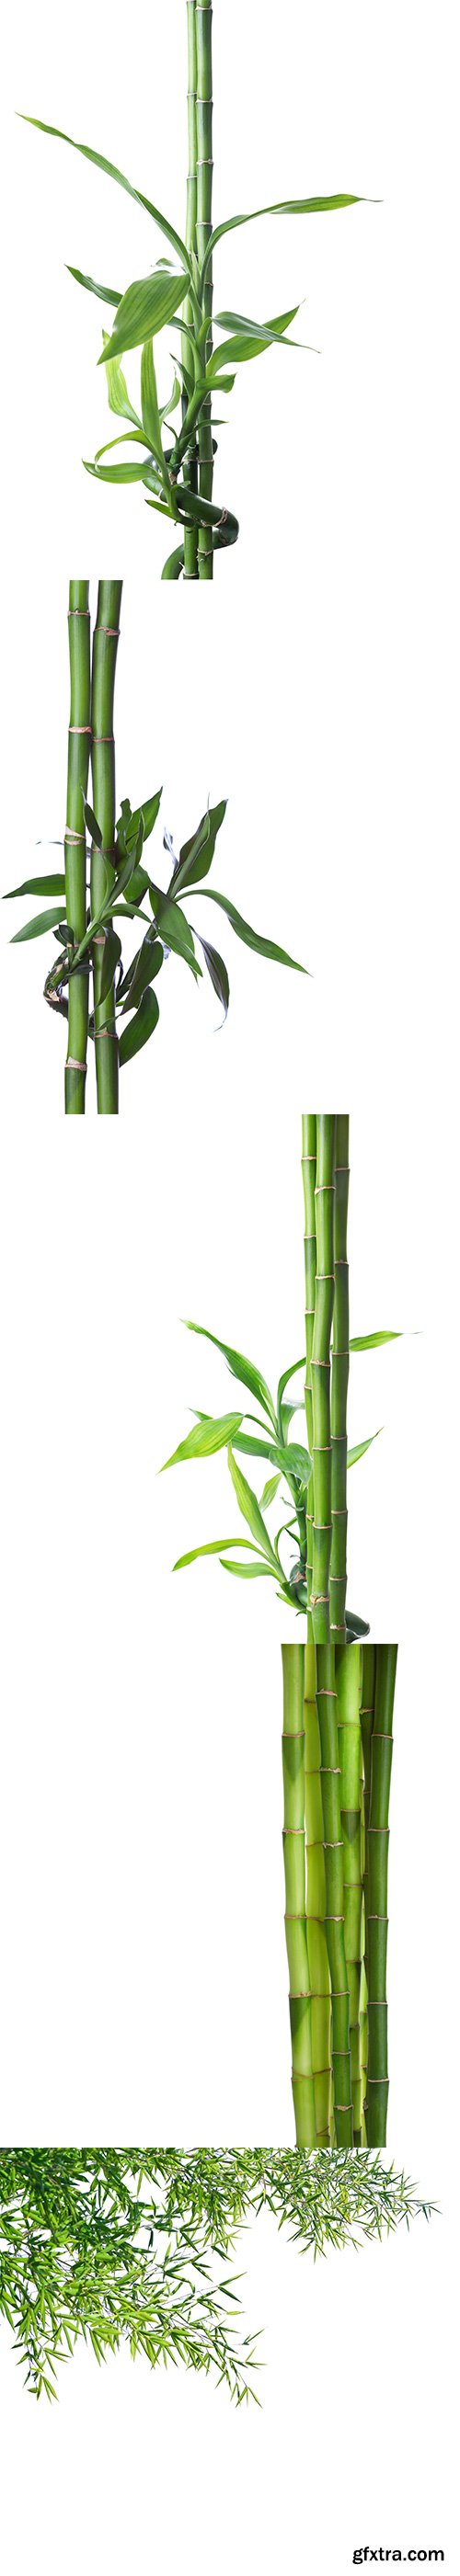 Bamboo Isolated - 5xJPGs